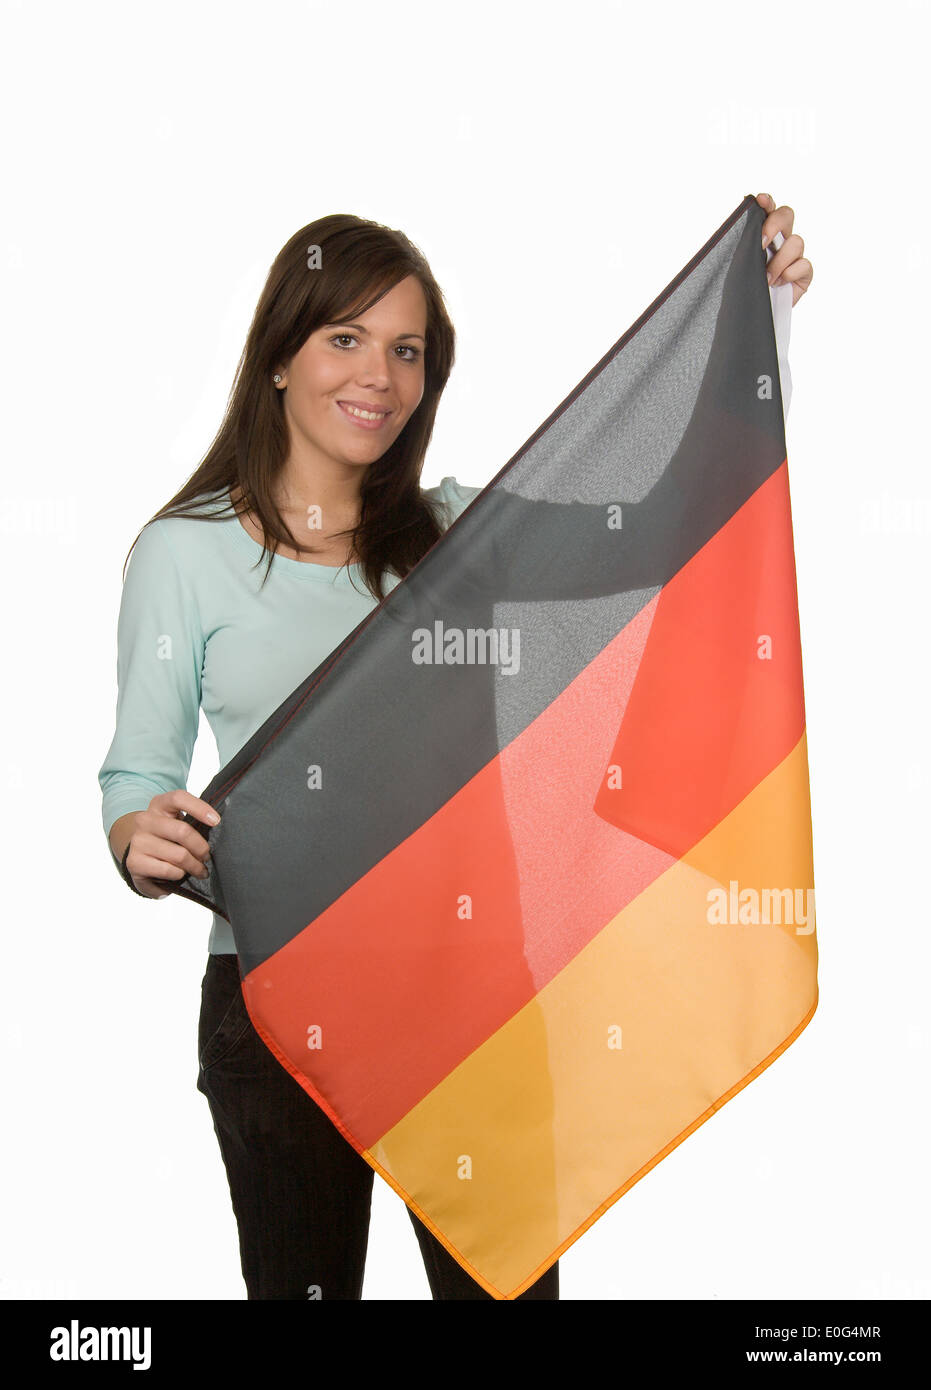 Deutschland Fahne Flagge / Germany flag Stock-Illustration